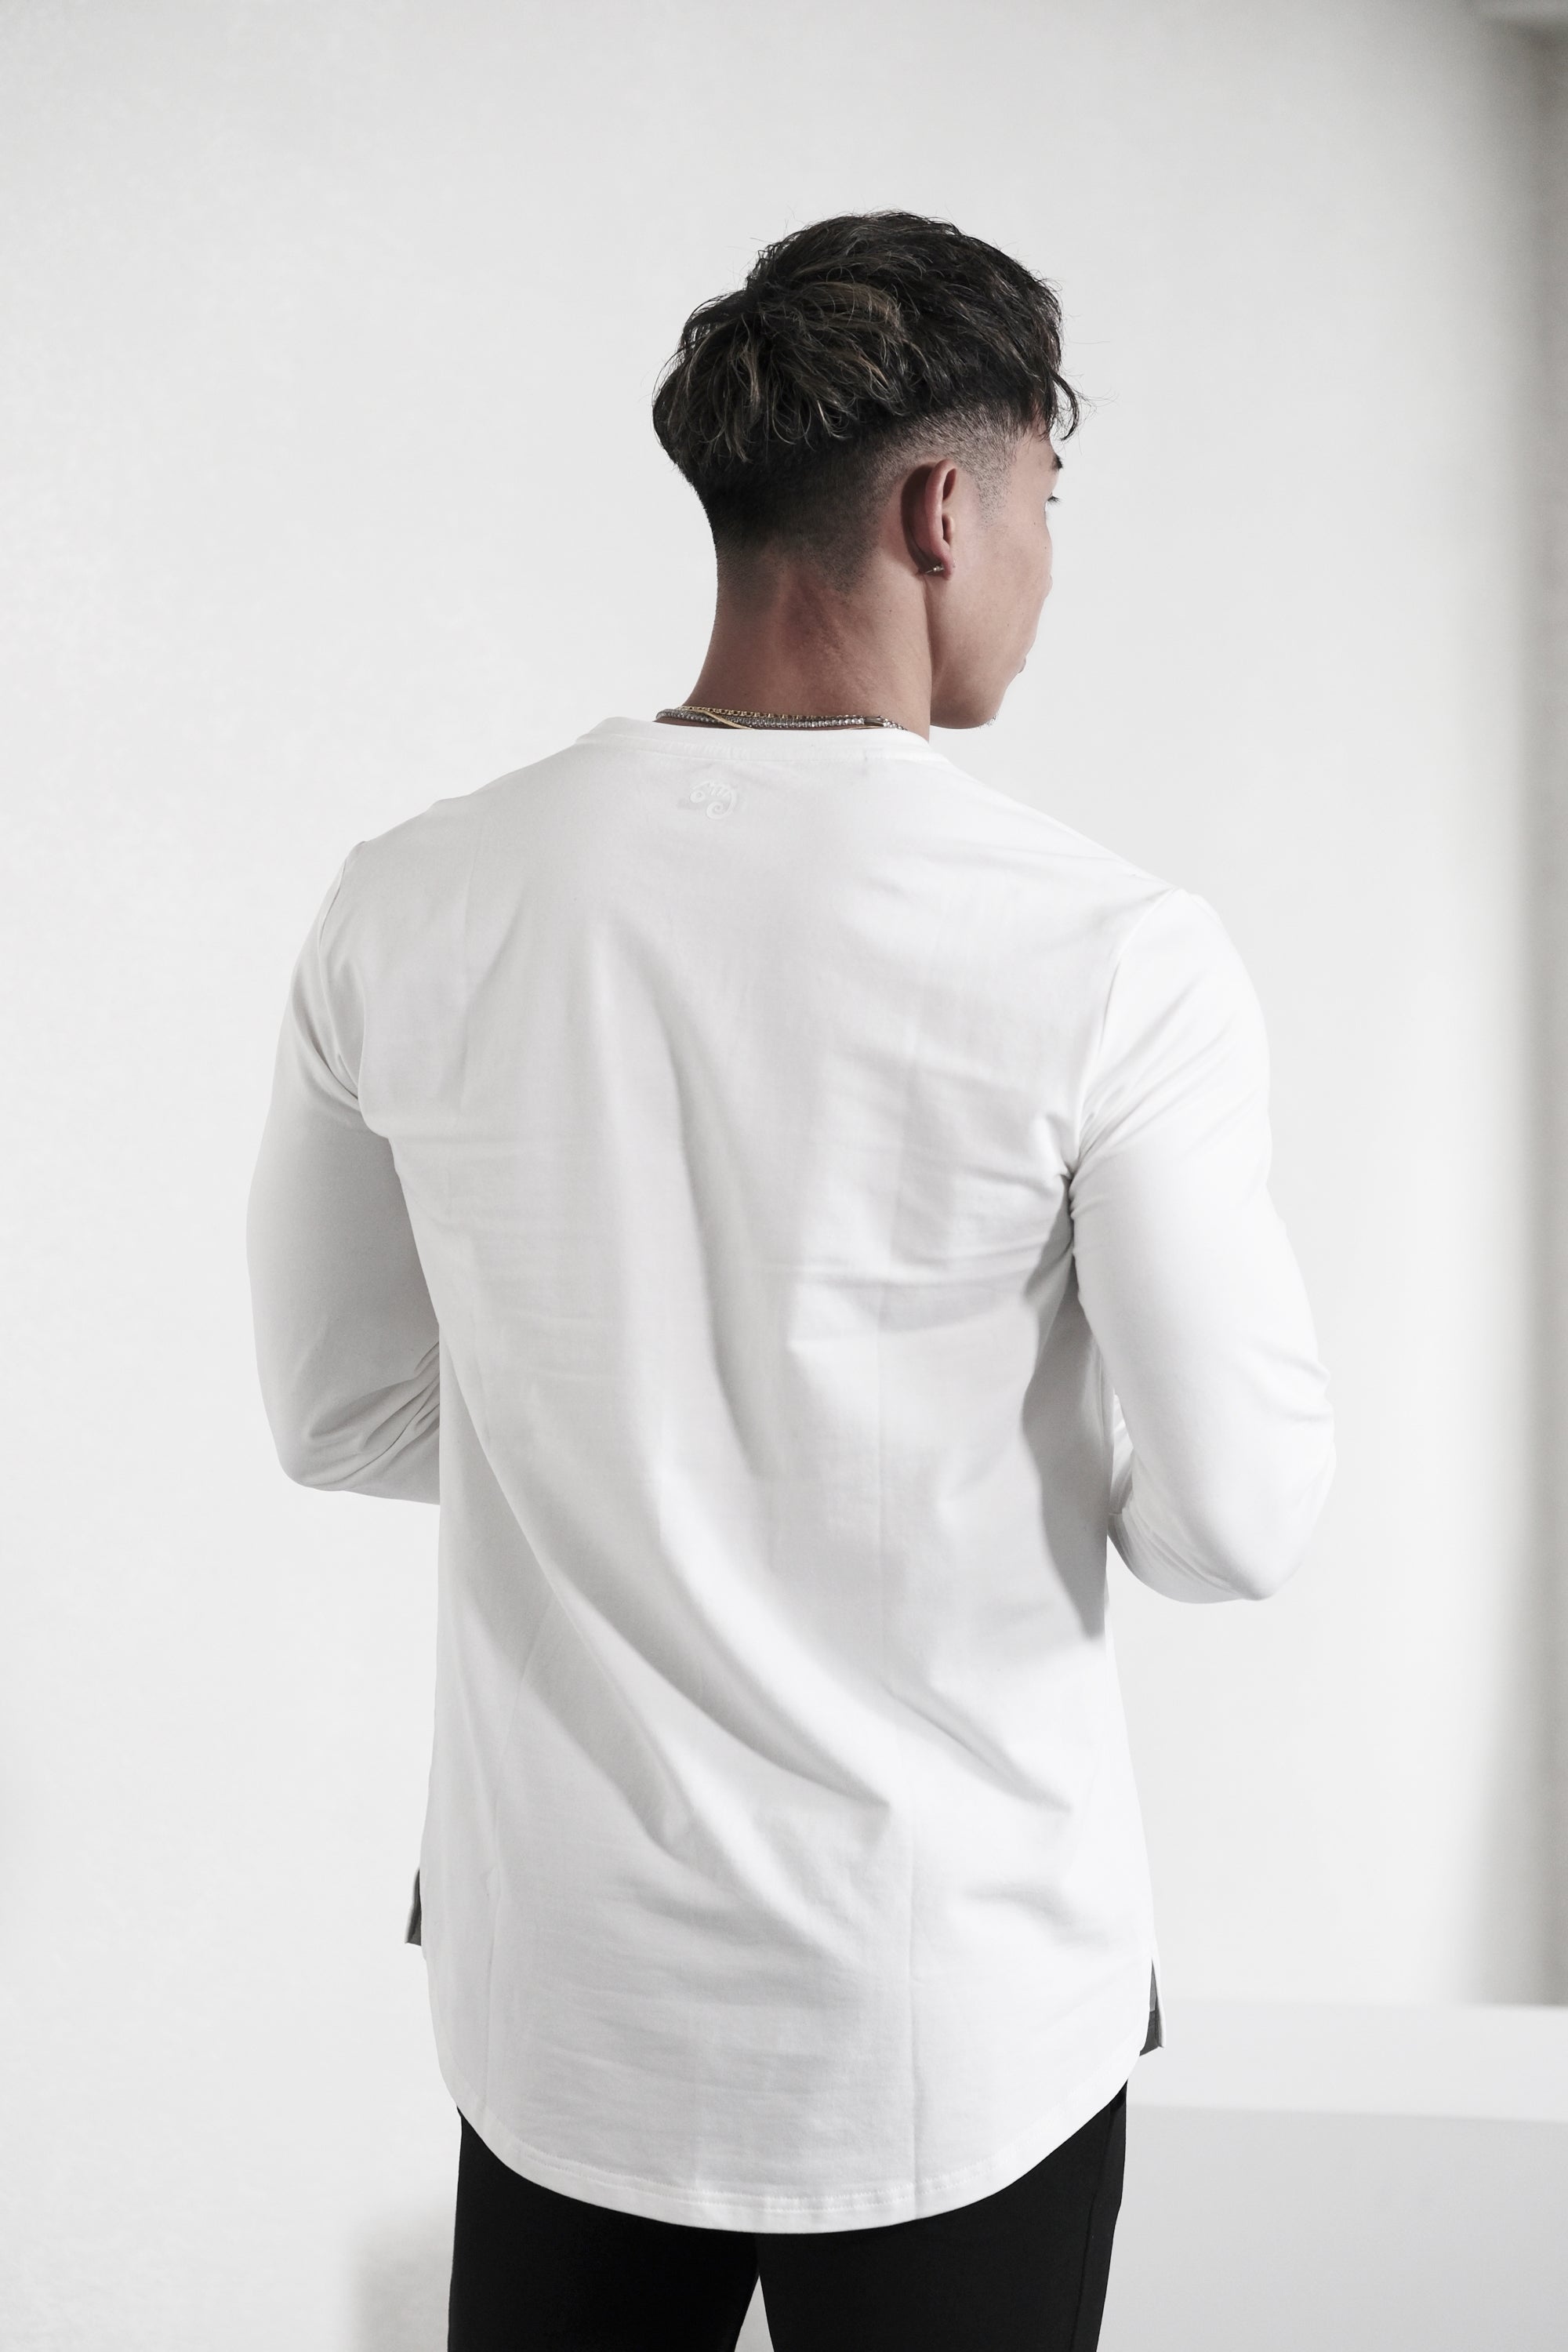 Pvot Athleisure Long Sleeve T-Shirts (Off White)